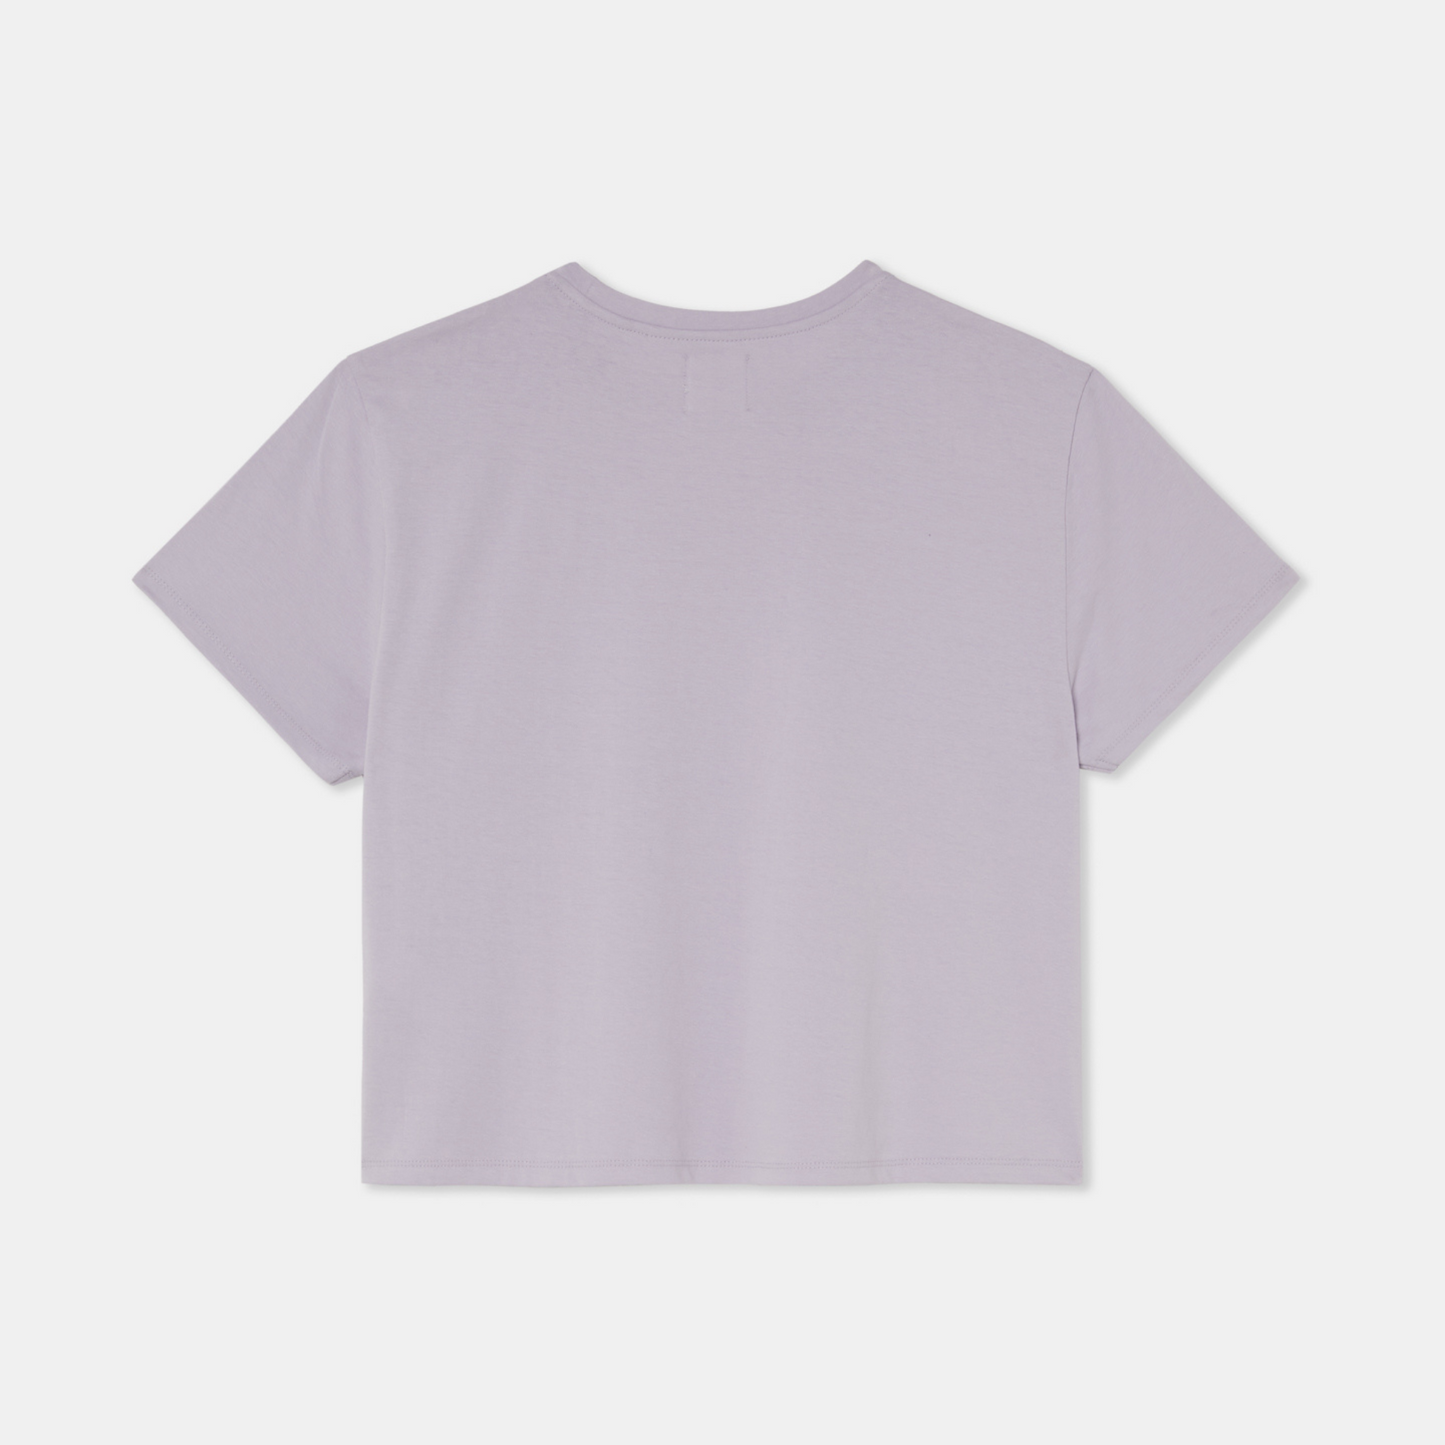 T-shirt middle crop pink back